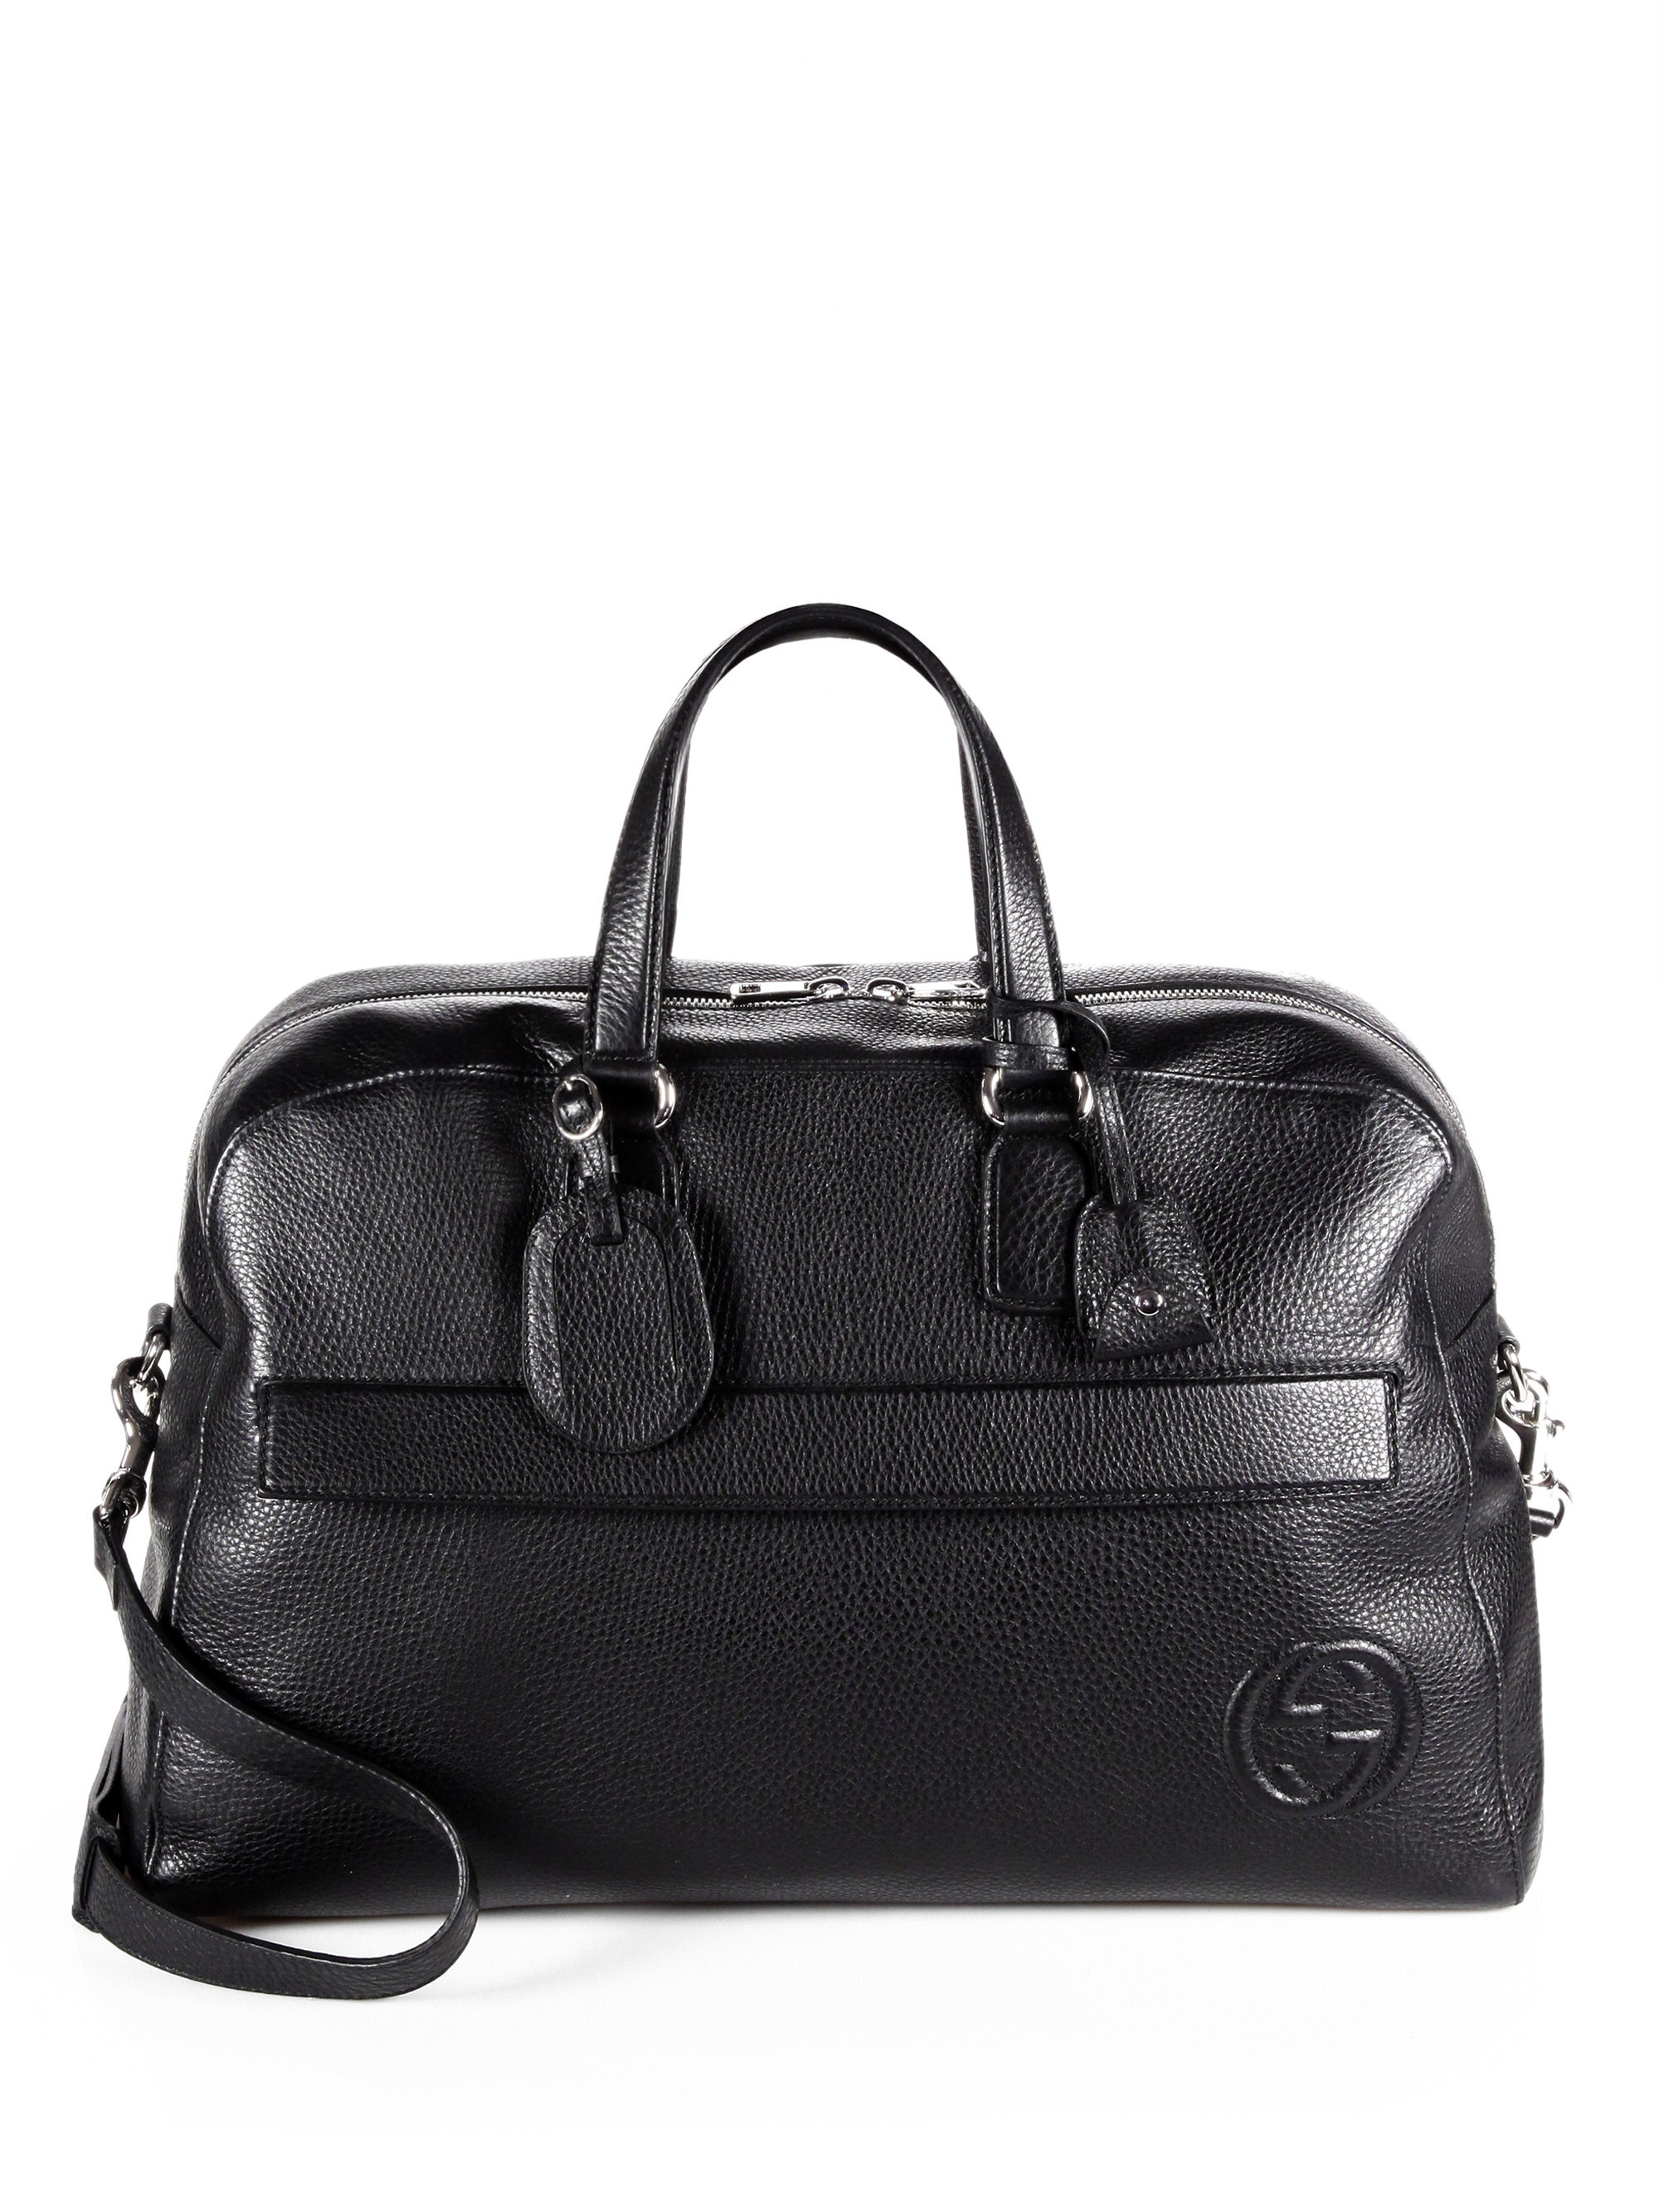 Gucci Soho Leather Duffel Bag in Black Leather.jpg